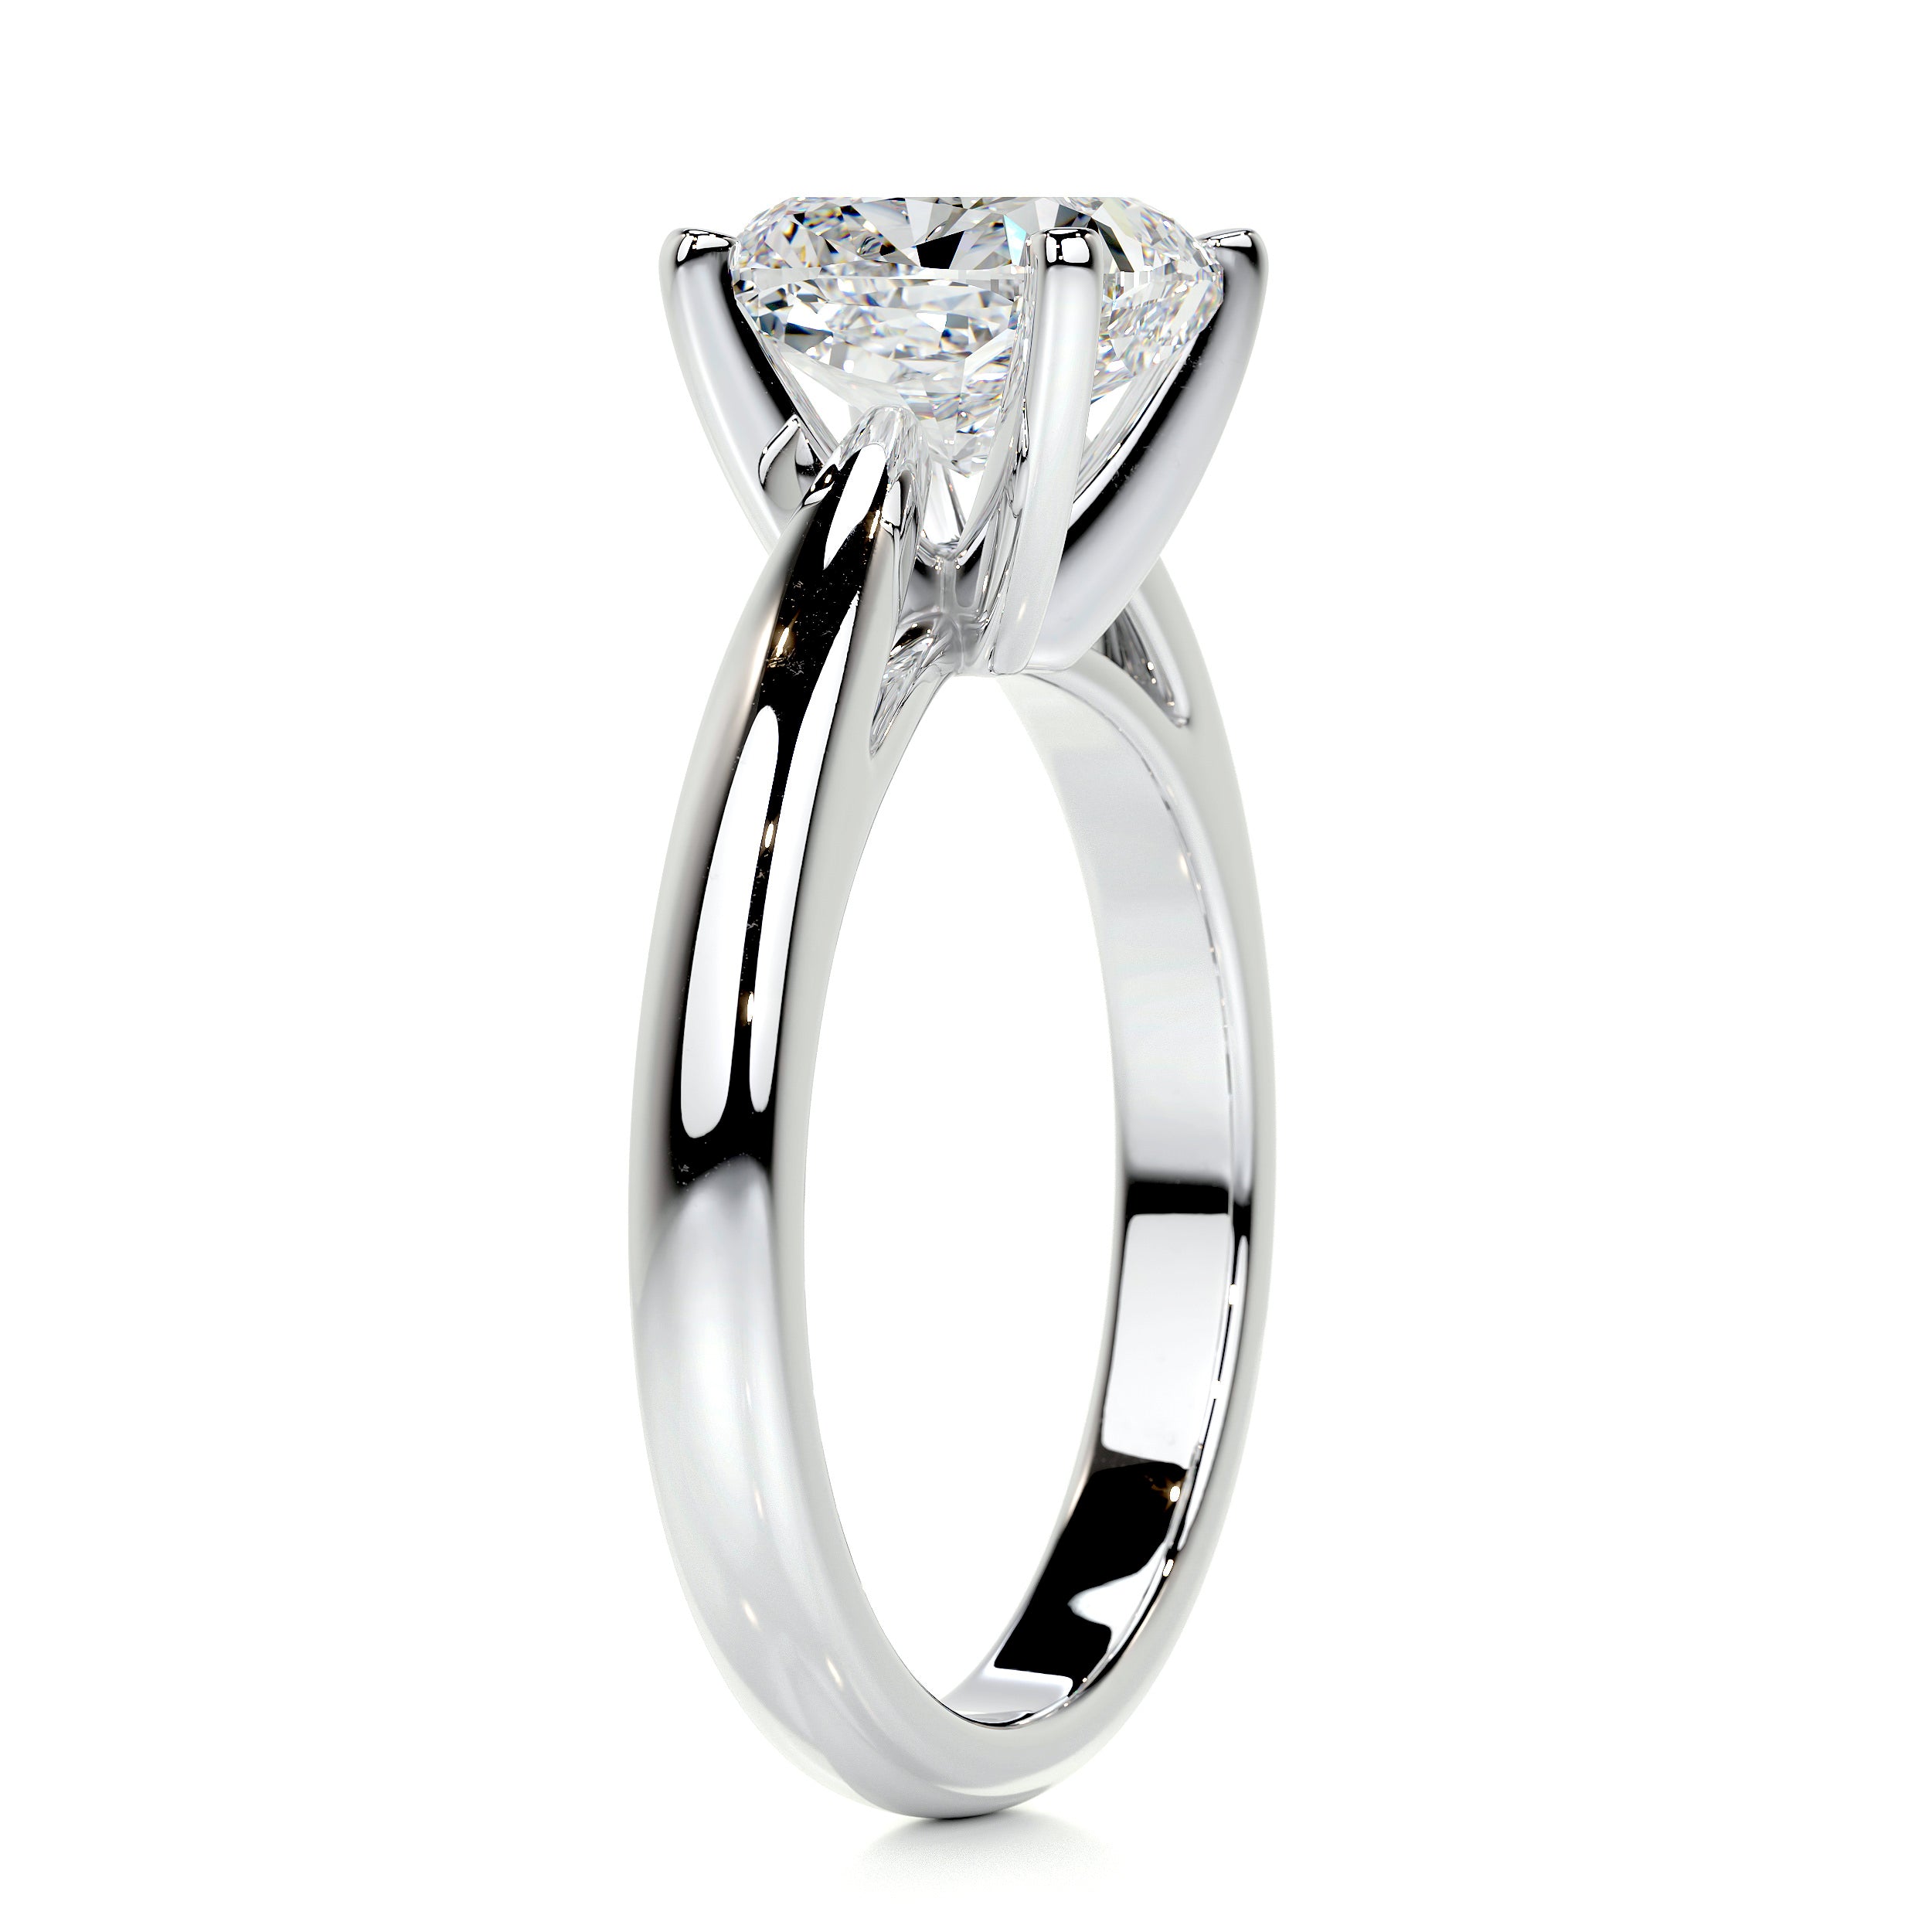 Diana Diamond Engagement Ring   (1.5 Carat) -Platinum